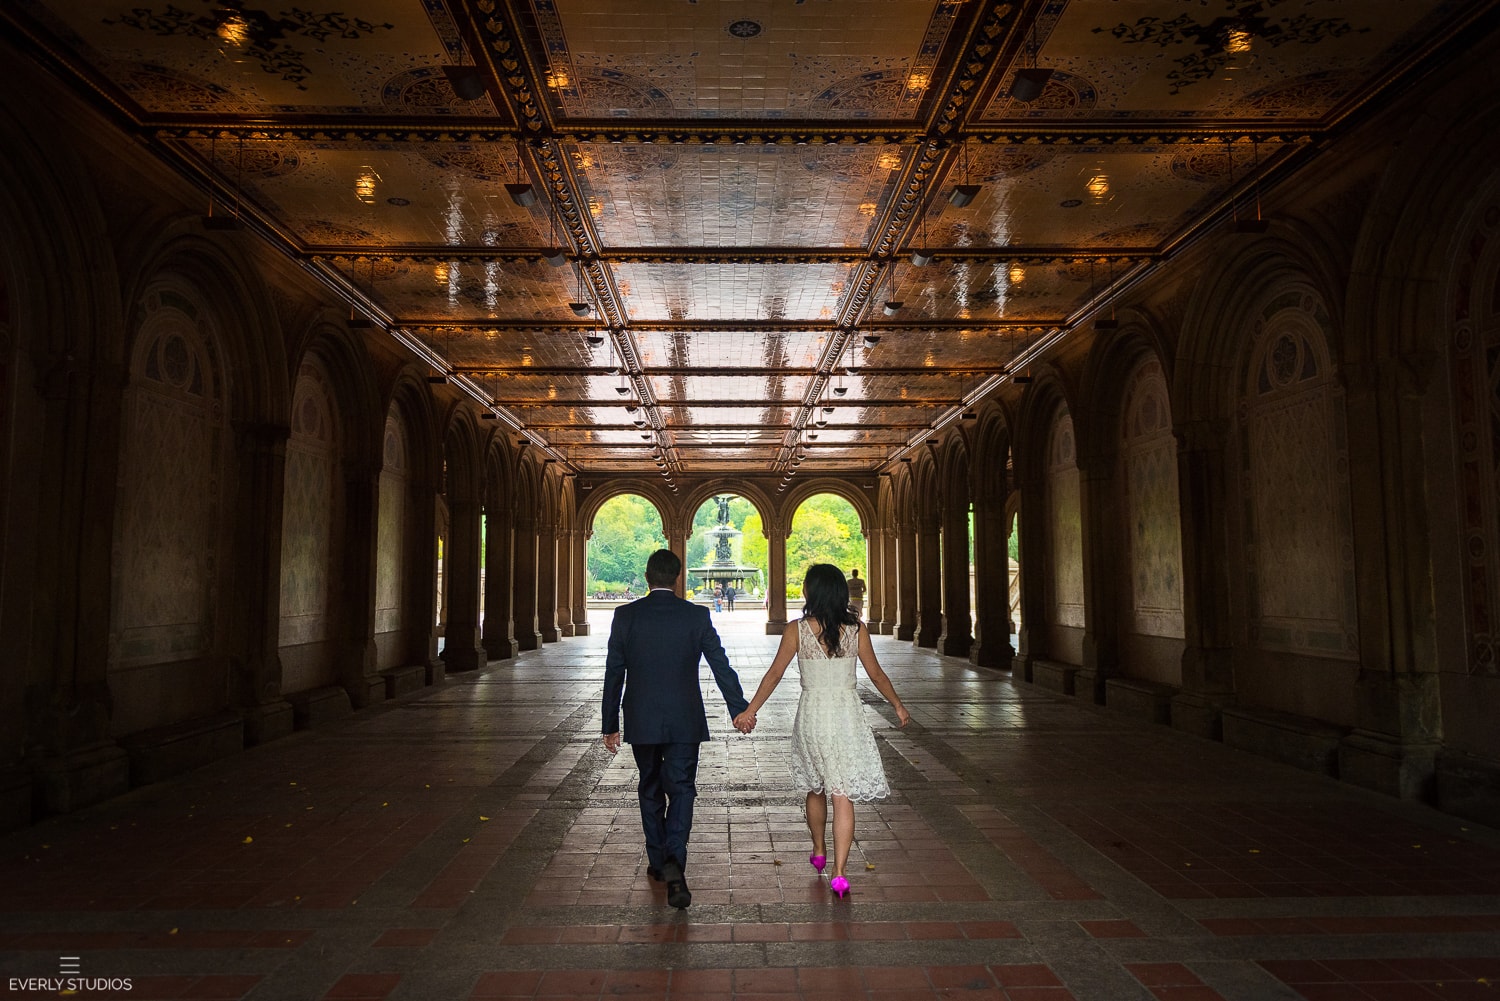 Central Park engagement photos. Photos by New York wedding photographer Everly Studios, www.everlystudios.com